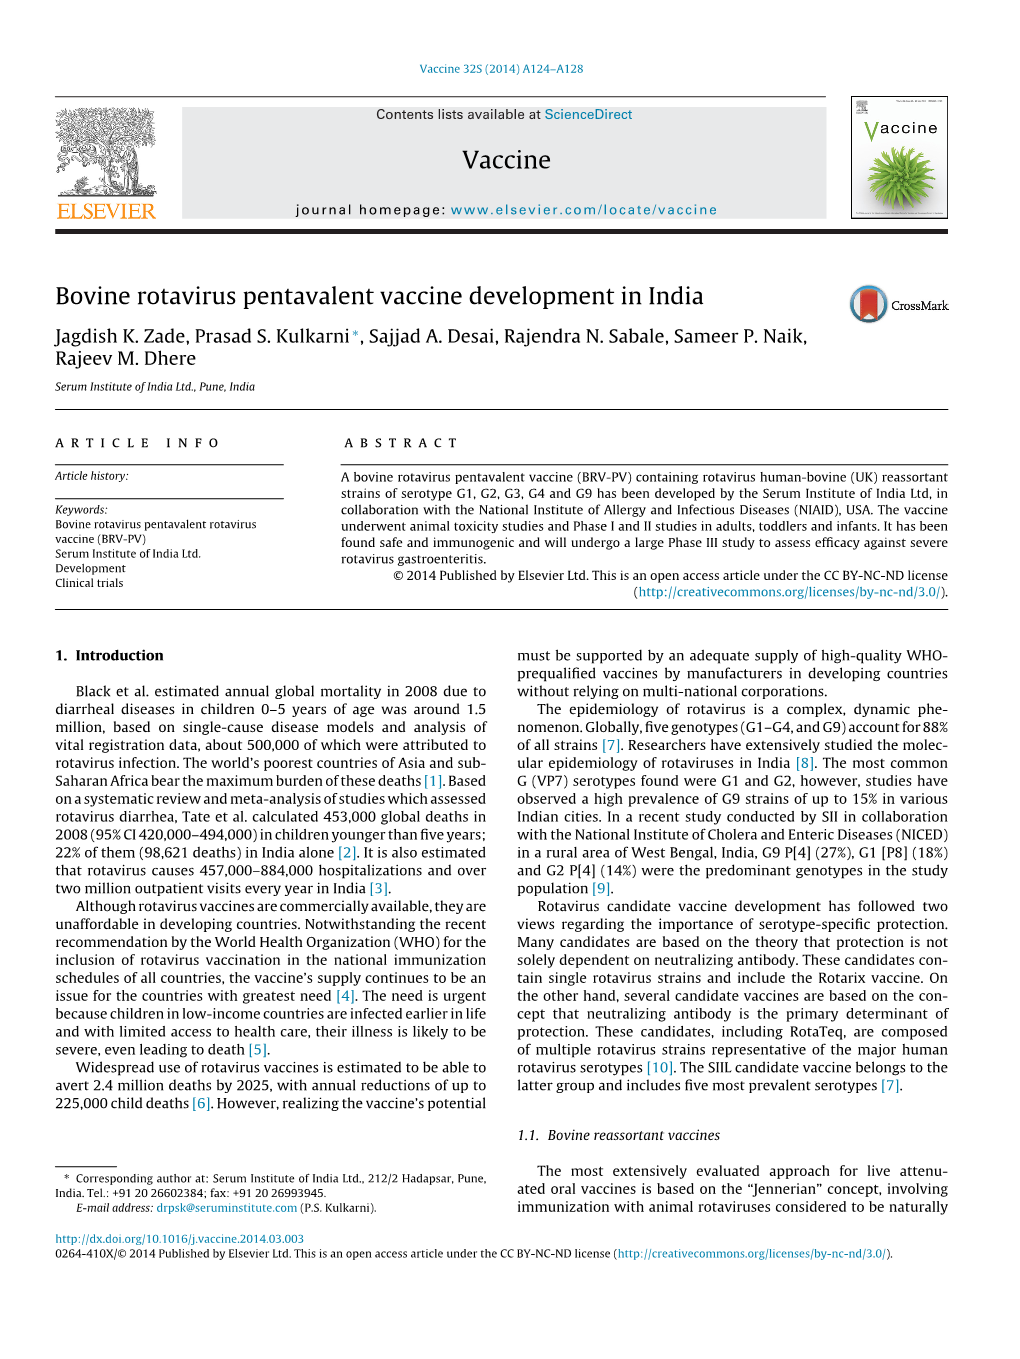 Bovine Rotavirus Pentavalent Vaccine Development in India